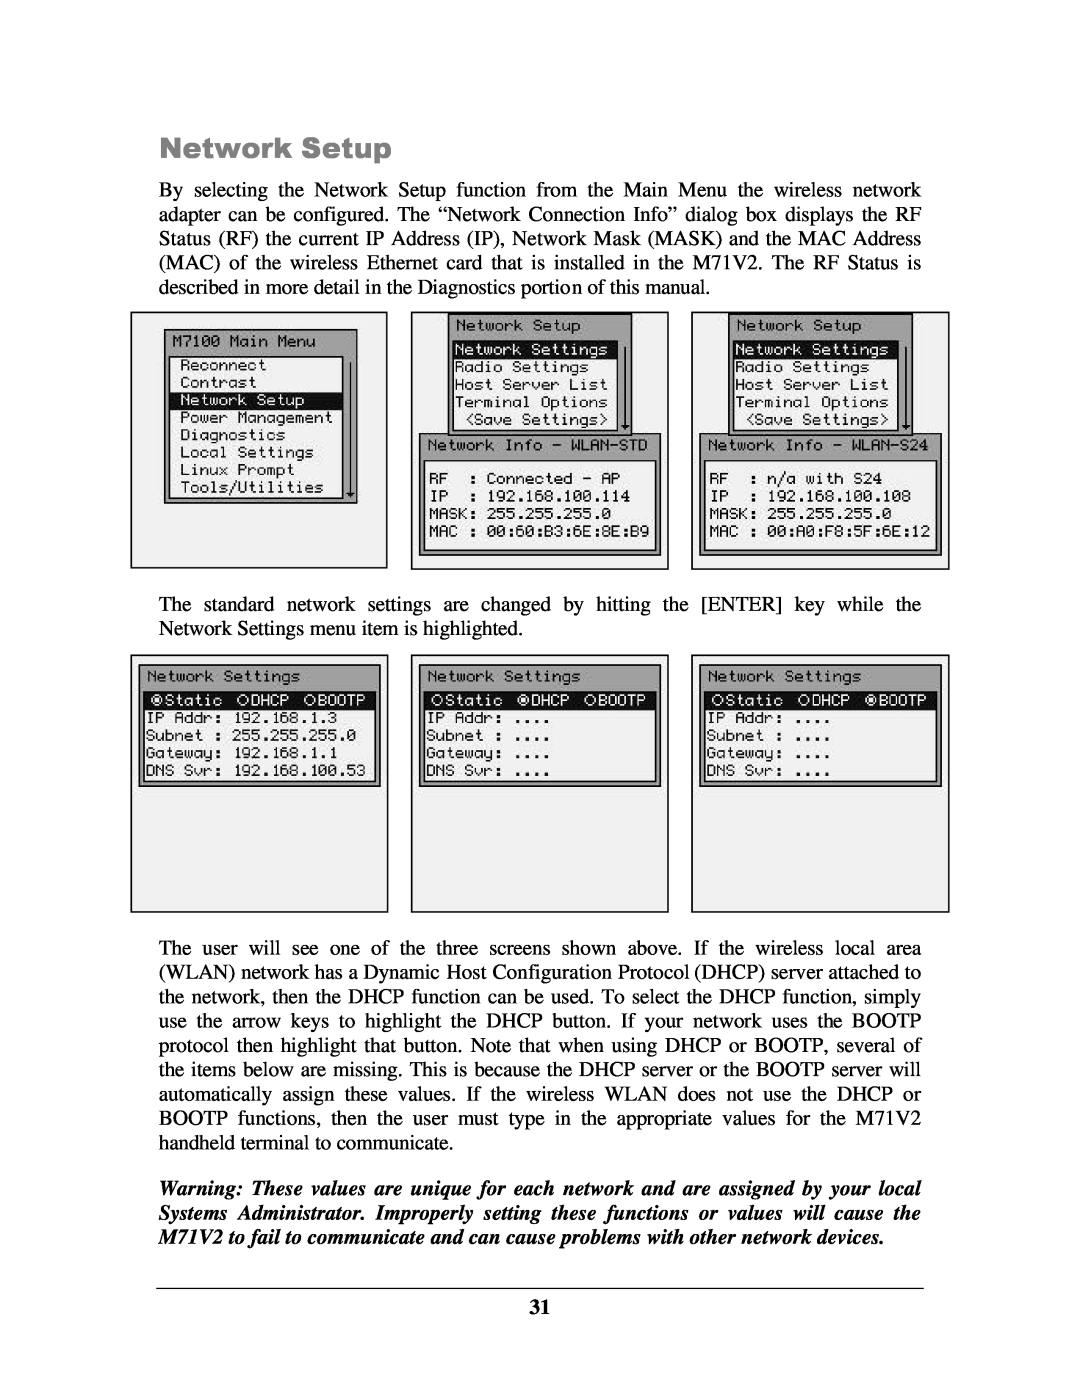 IBM M71V2 manual Network Setup 